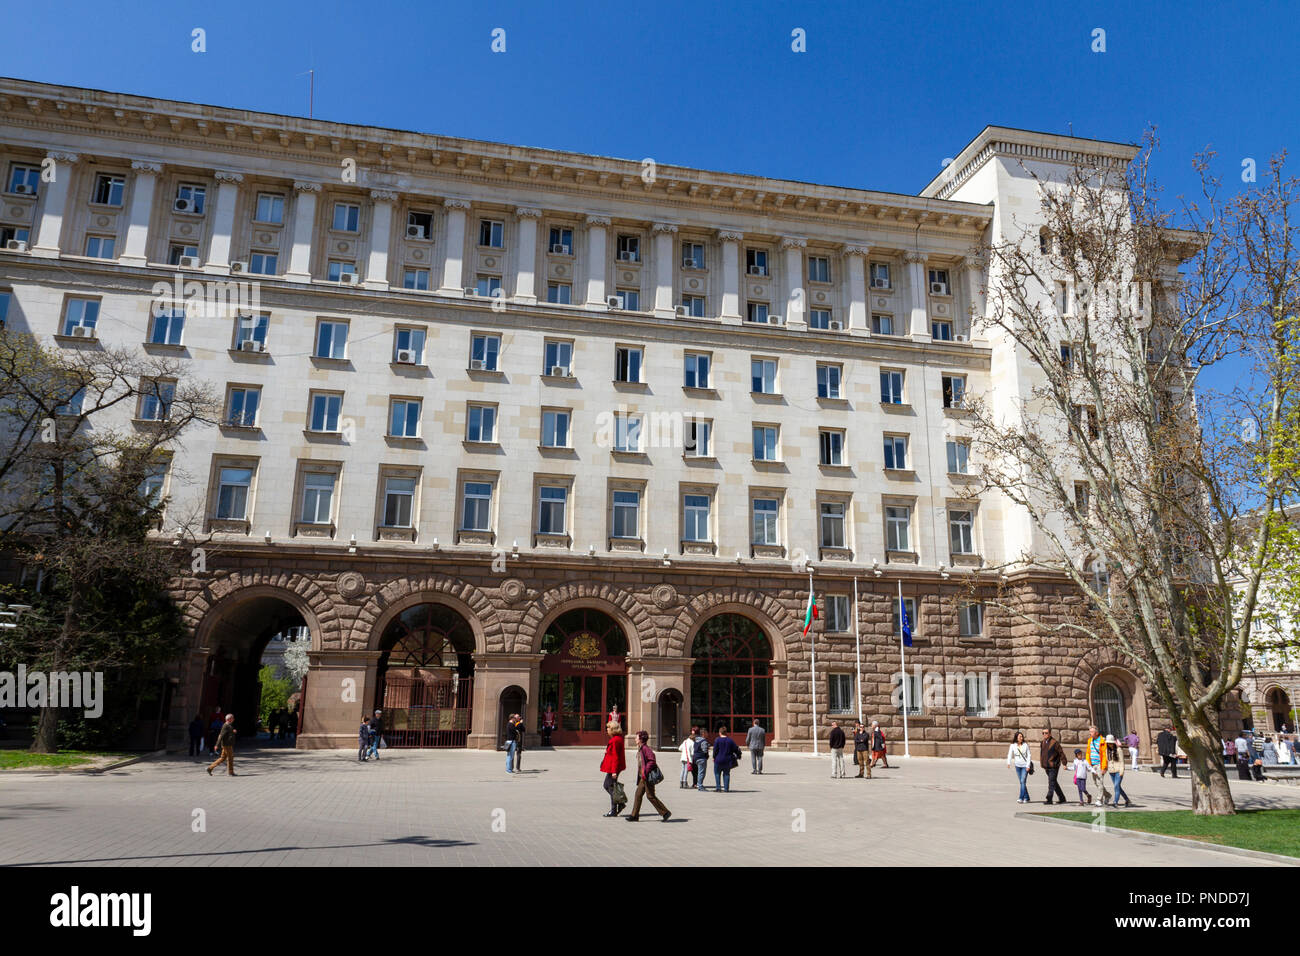 The Presidency building, home to the President of Republic of Bulgaria, Sofia, Bulgaria. Stock Photo